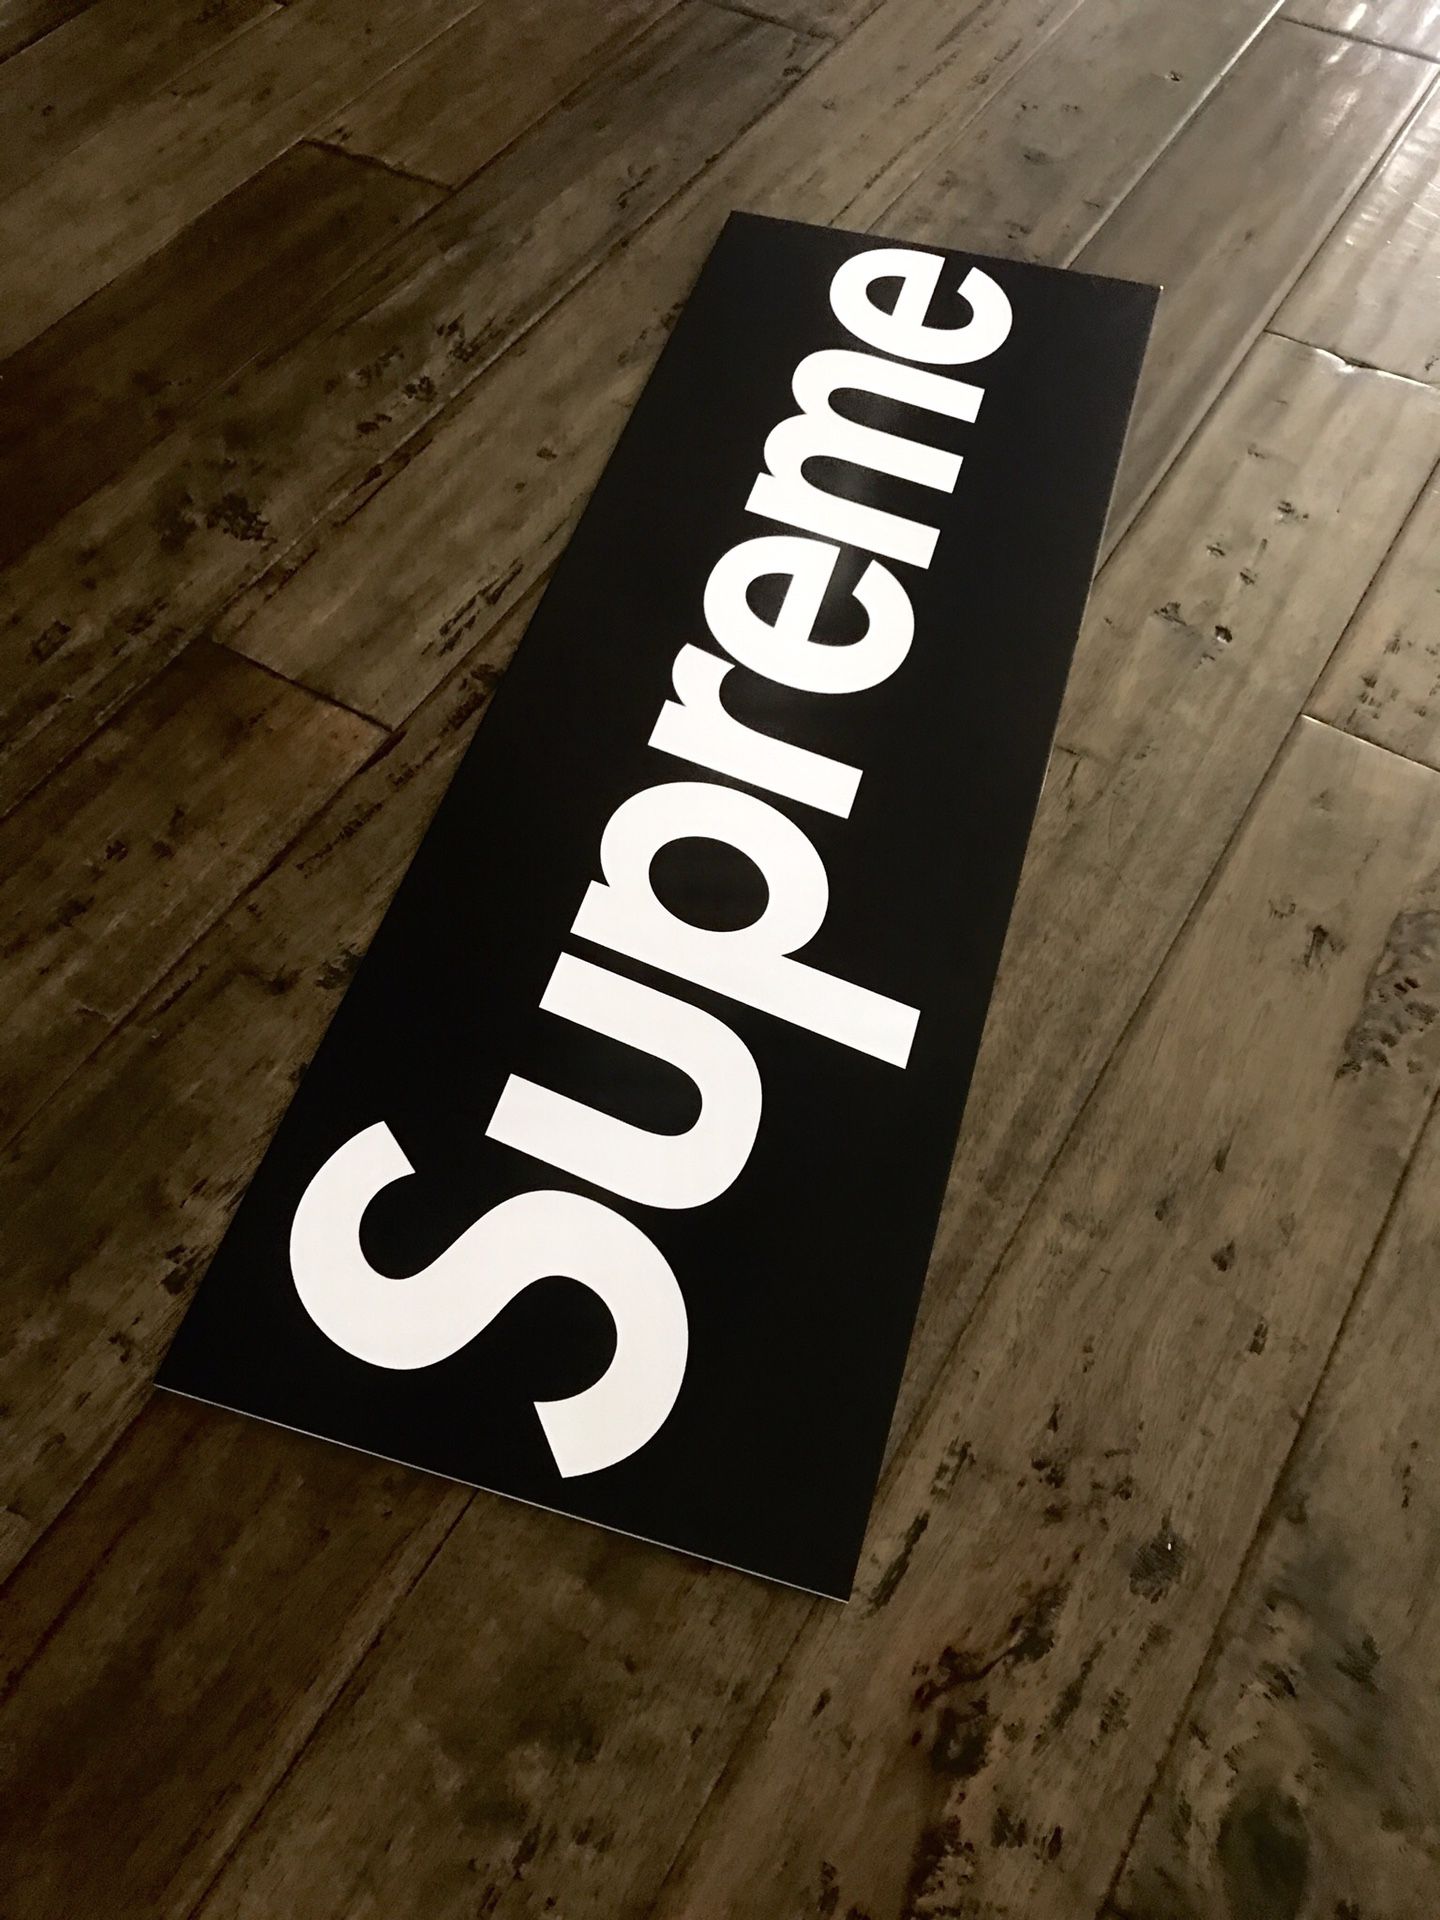 Supreme Kaws Poster Mounted on Foam Board 12x36 inch